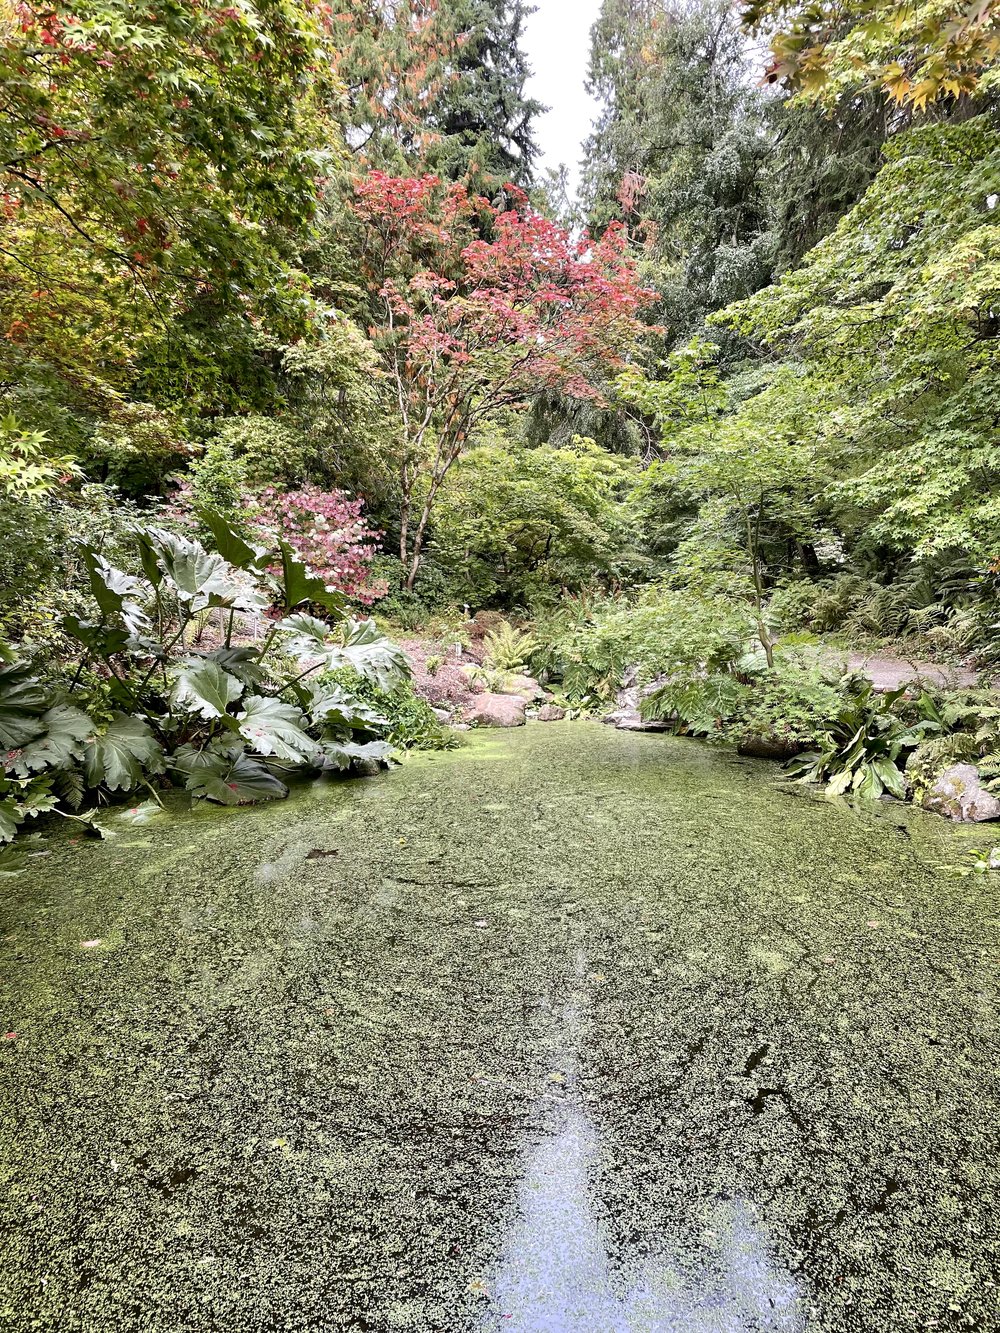 Japanese Pond